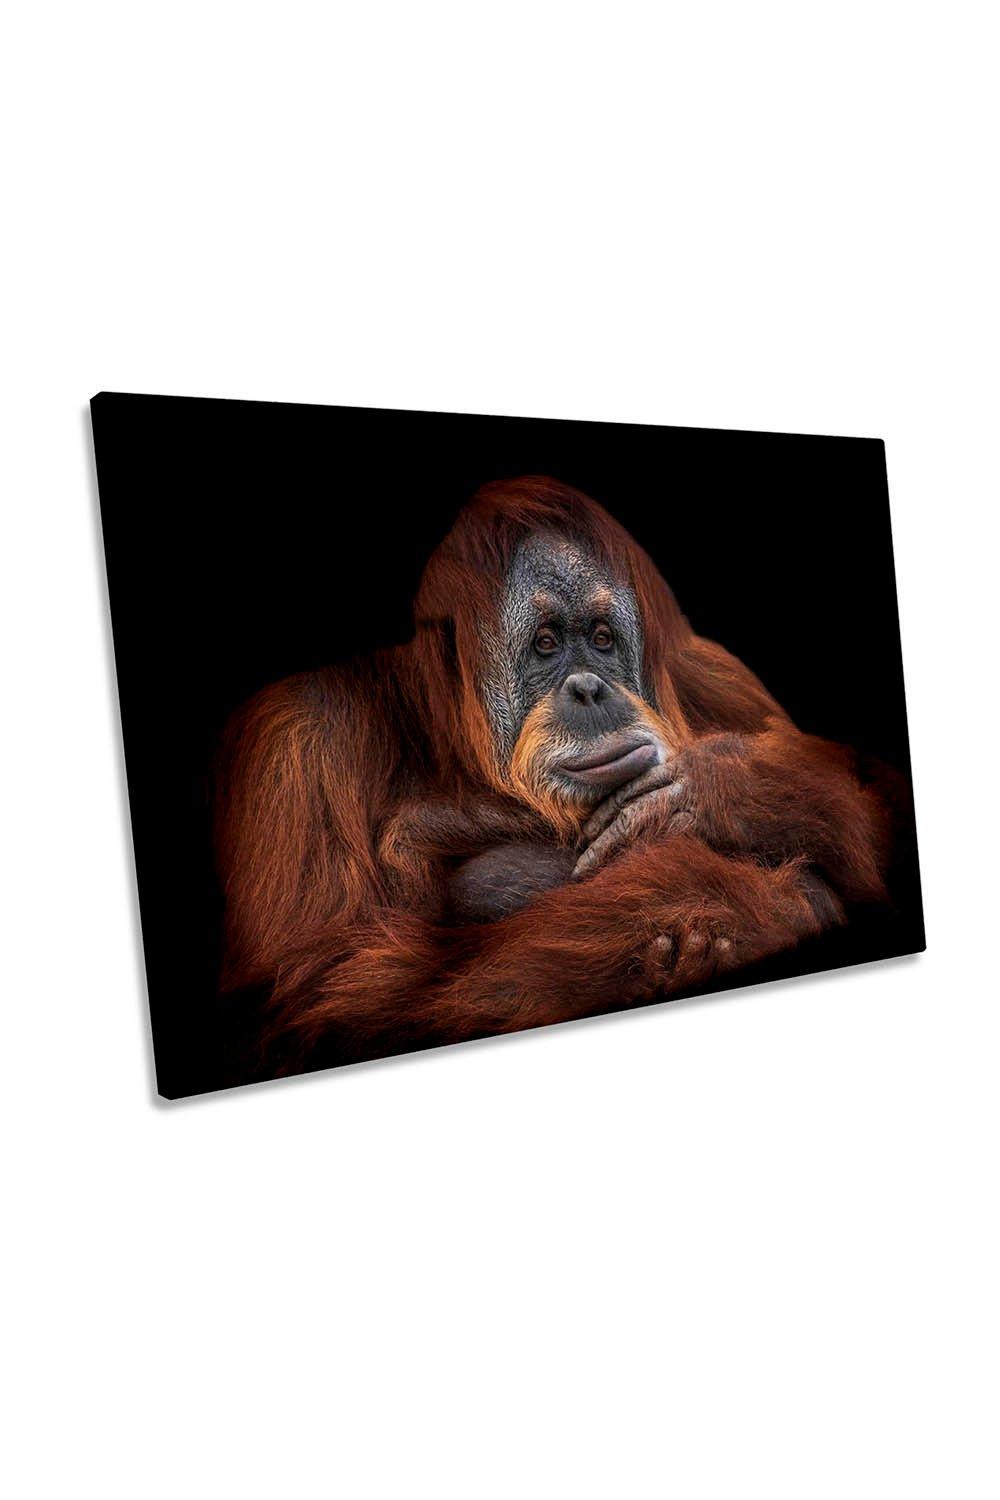 Moments Orangutan Monkey Canvas Wall Art Picture Print